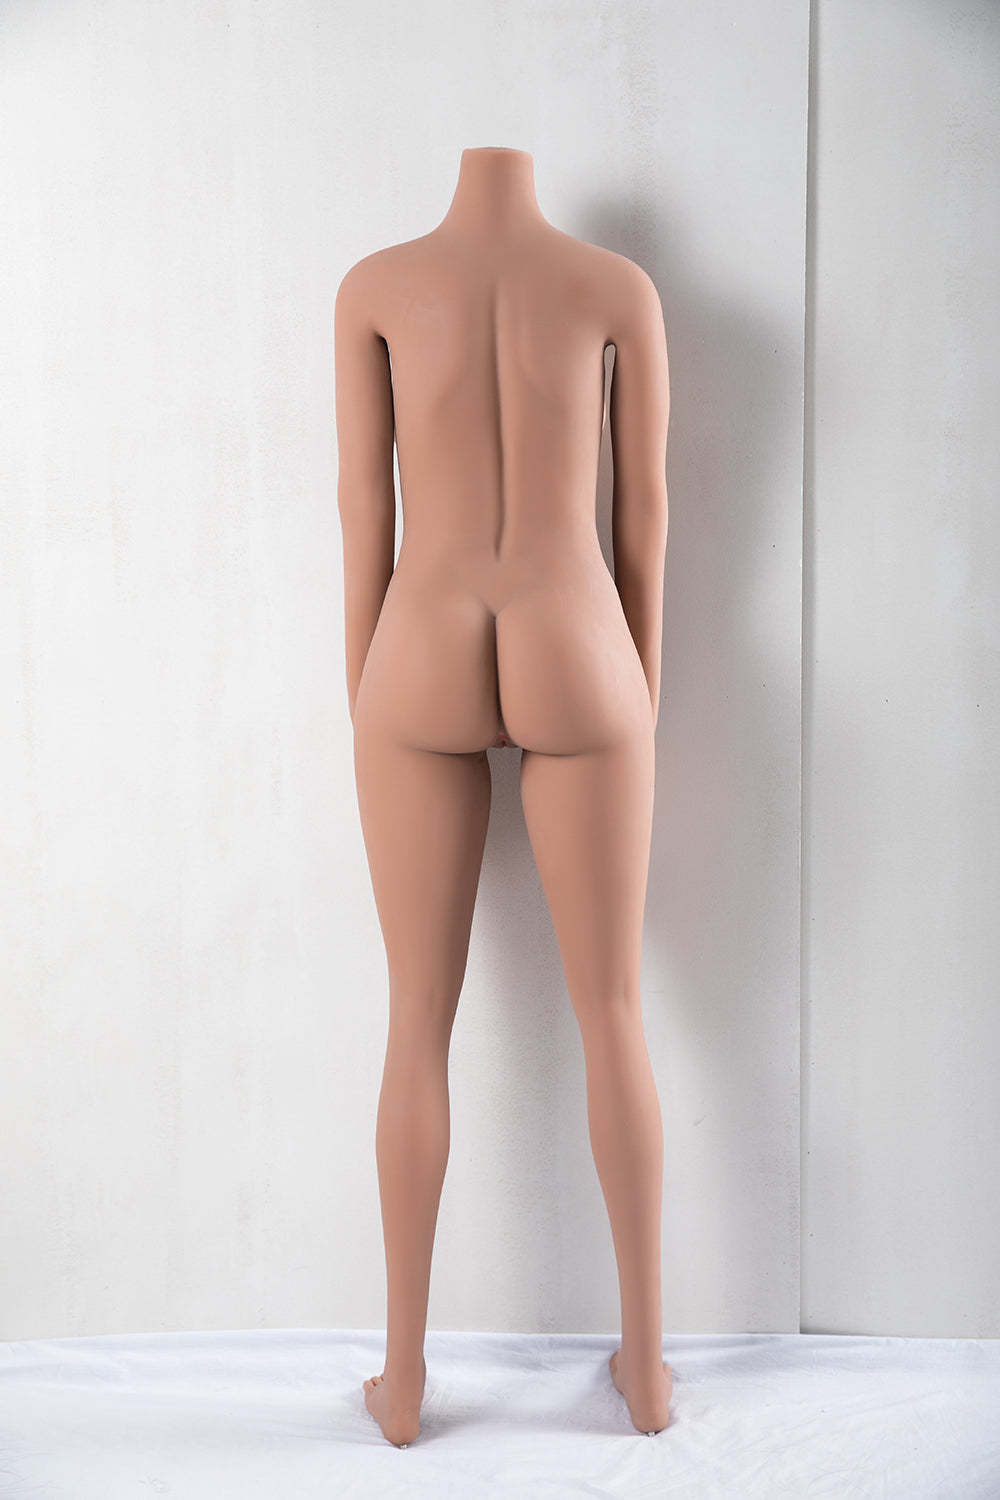 Joy-5 ft 5 in / 165 cm Realistic Sex Doll